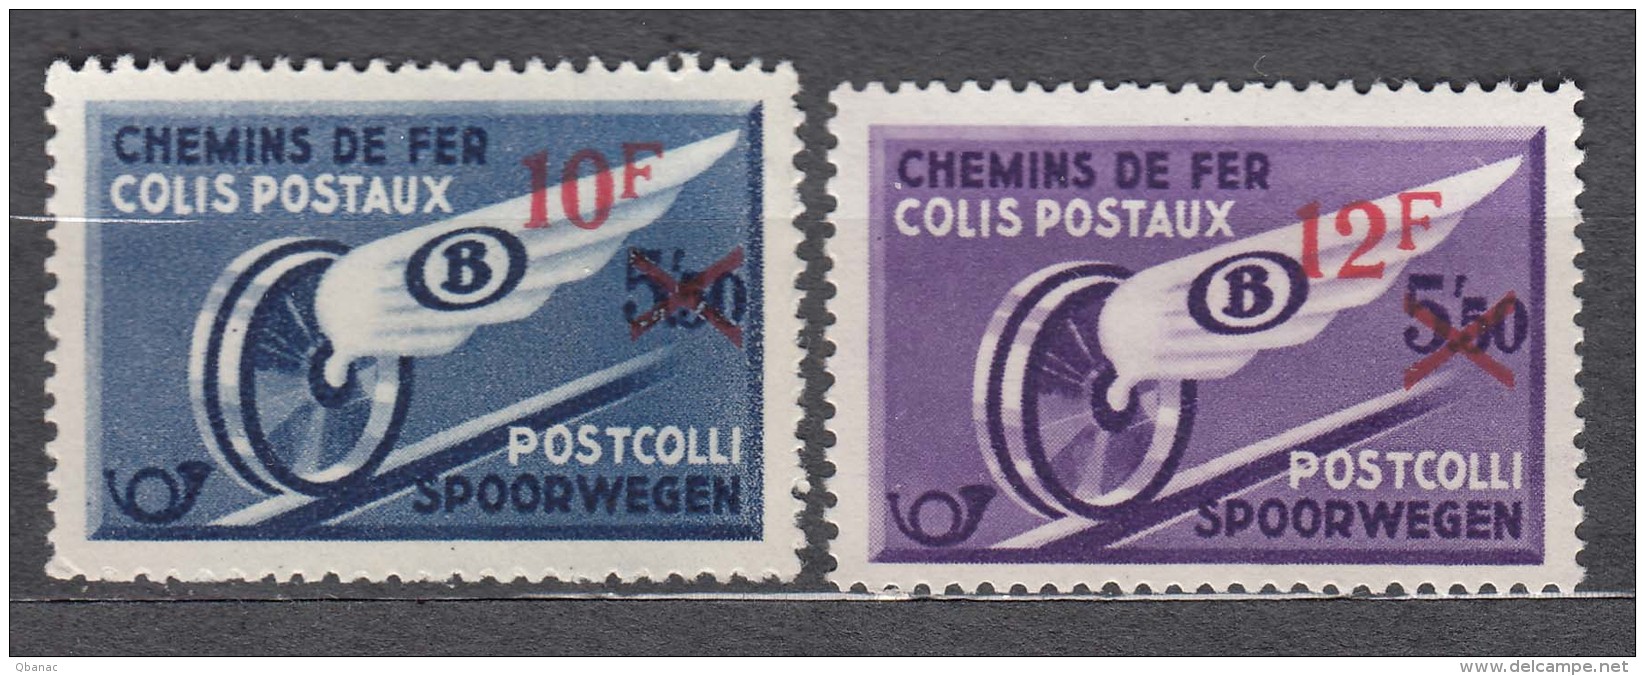 Belgium Postpaket Stamps, Mint Hinged - Bagages [BA]